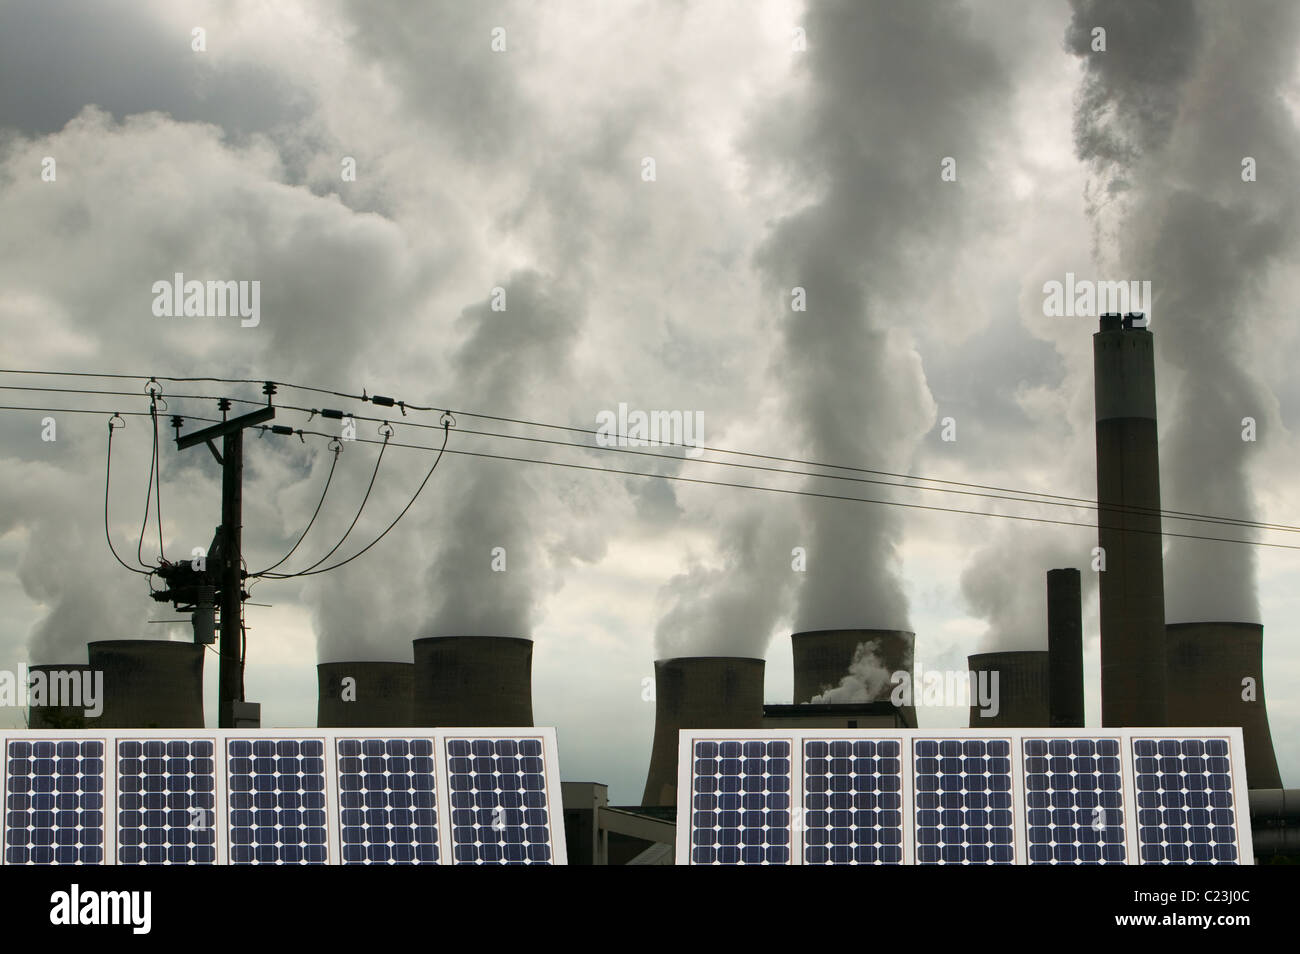 Ratcliffe auf Soar eine massive Kohle betriebene Kraftwerk in Nottinghamshire UK und Sonnenkollektoren. Stockfoto